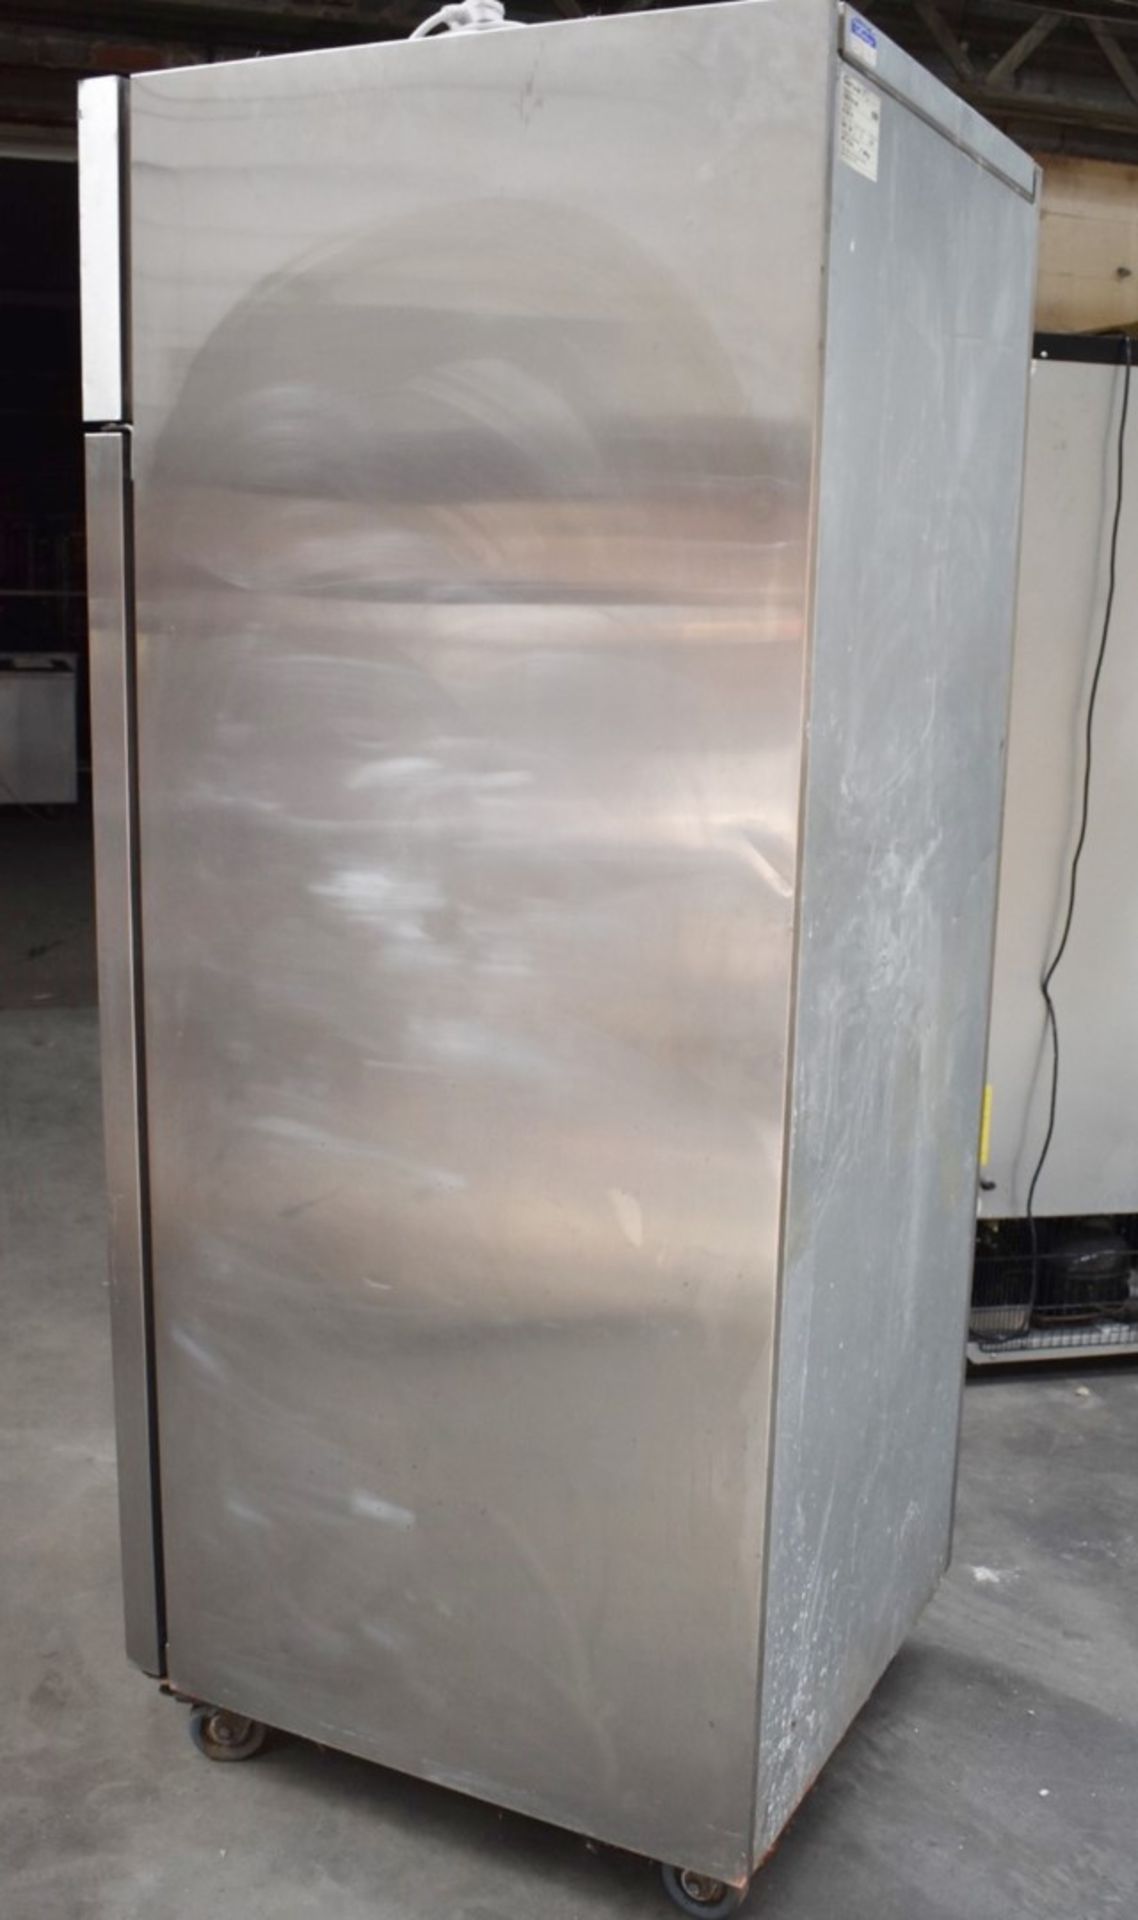 1 x Williams Jade Upright Single Door Refrigerator With Stainless Steel Exterior - Model HJ1TSA - - Image 9 of 11